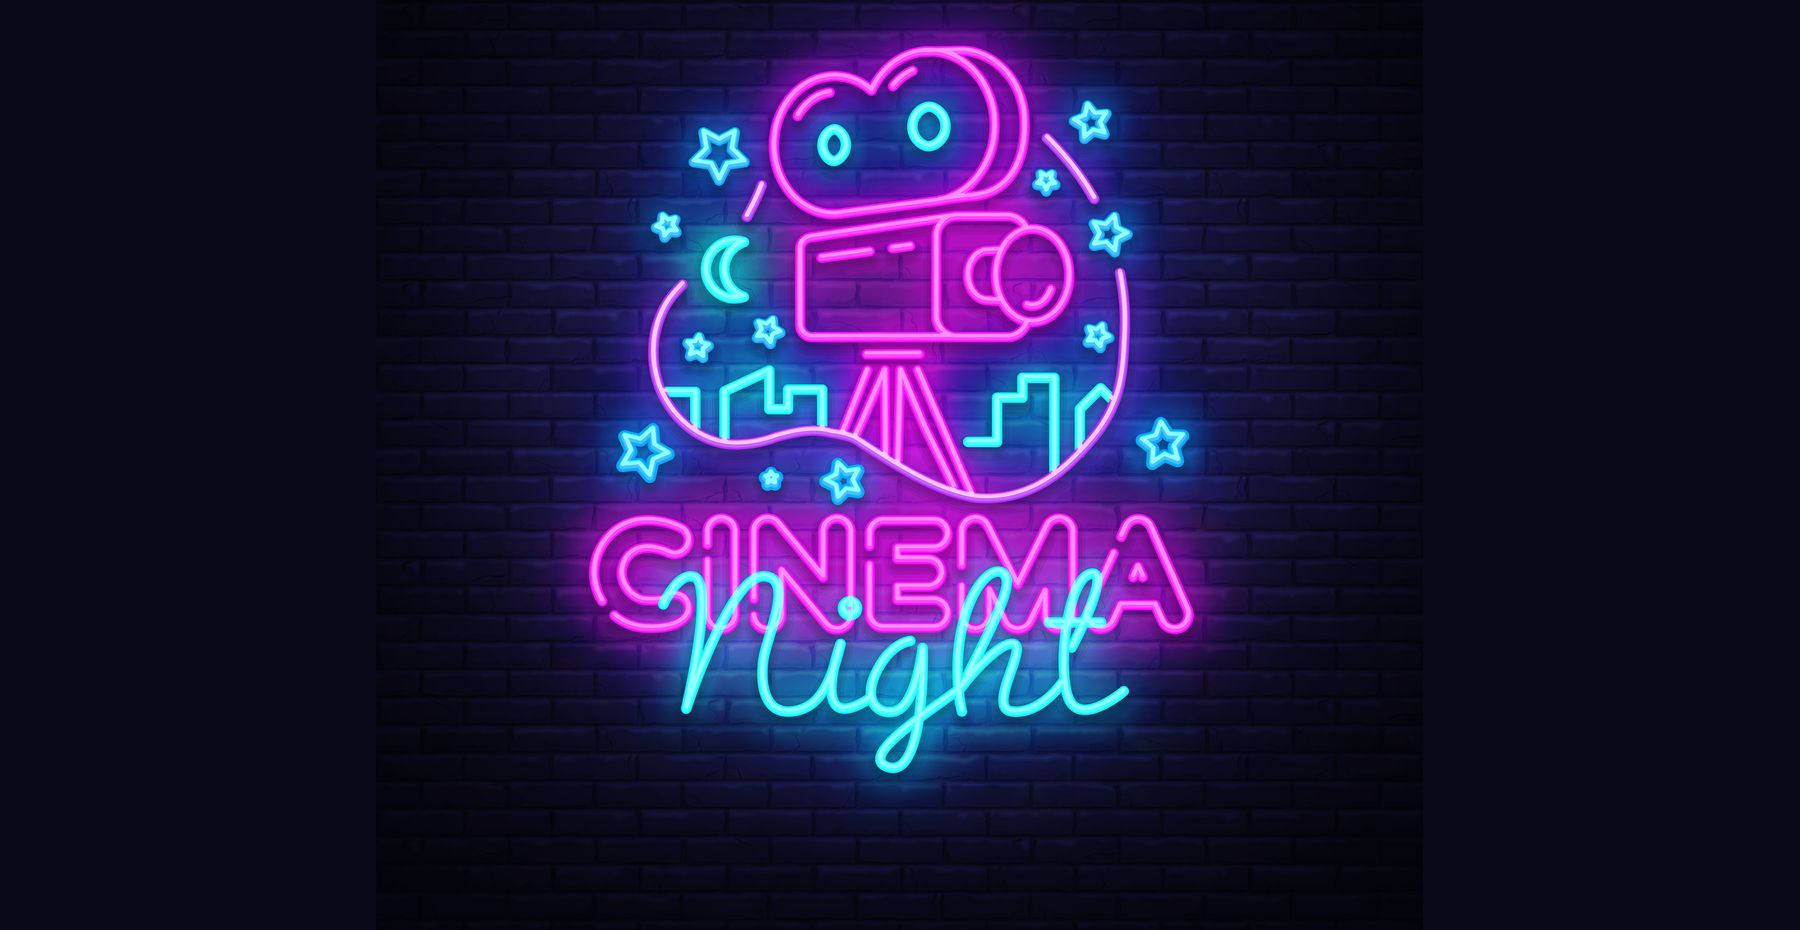 Cinema Night Neon Logo Vector. Movie Night neon sign, design template, modern trend design, night neon signboard, night light advertising, light banner, light art. Vector illustration.